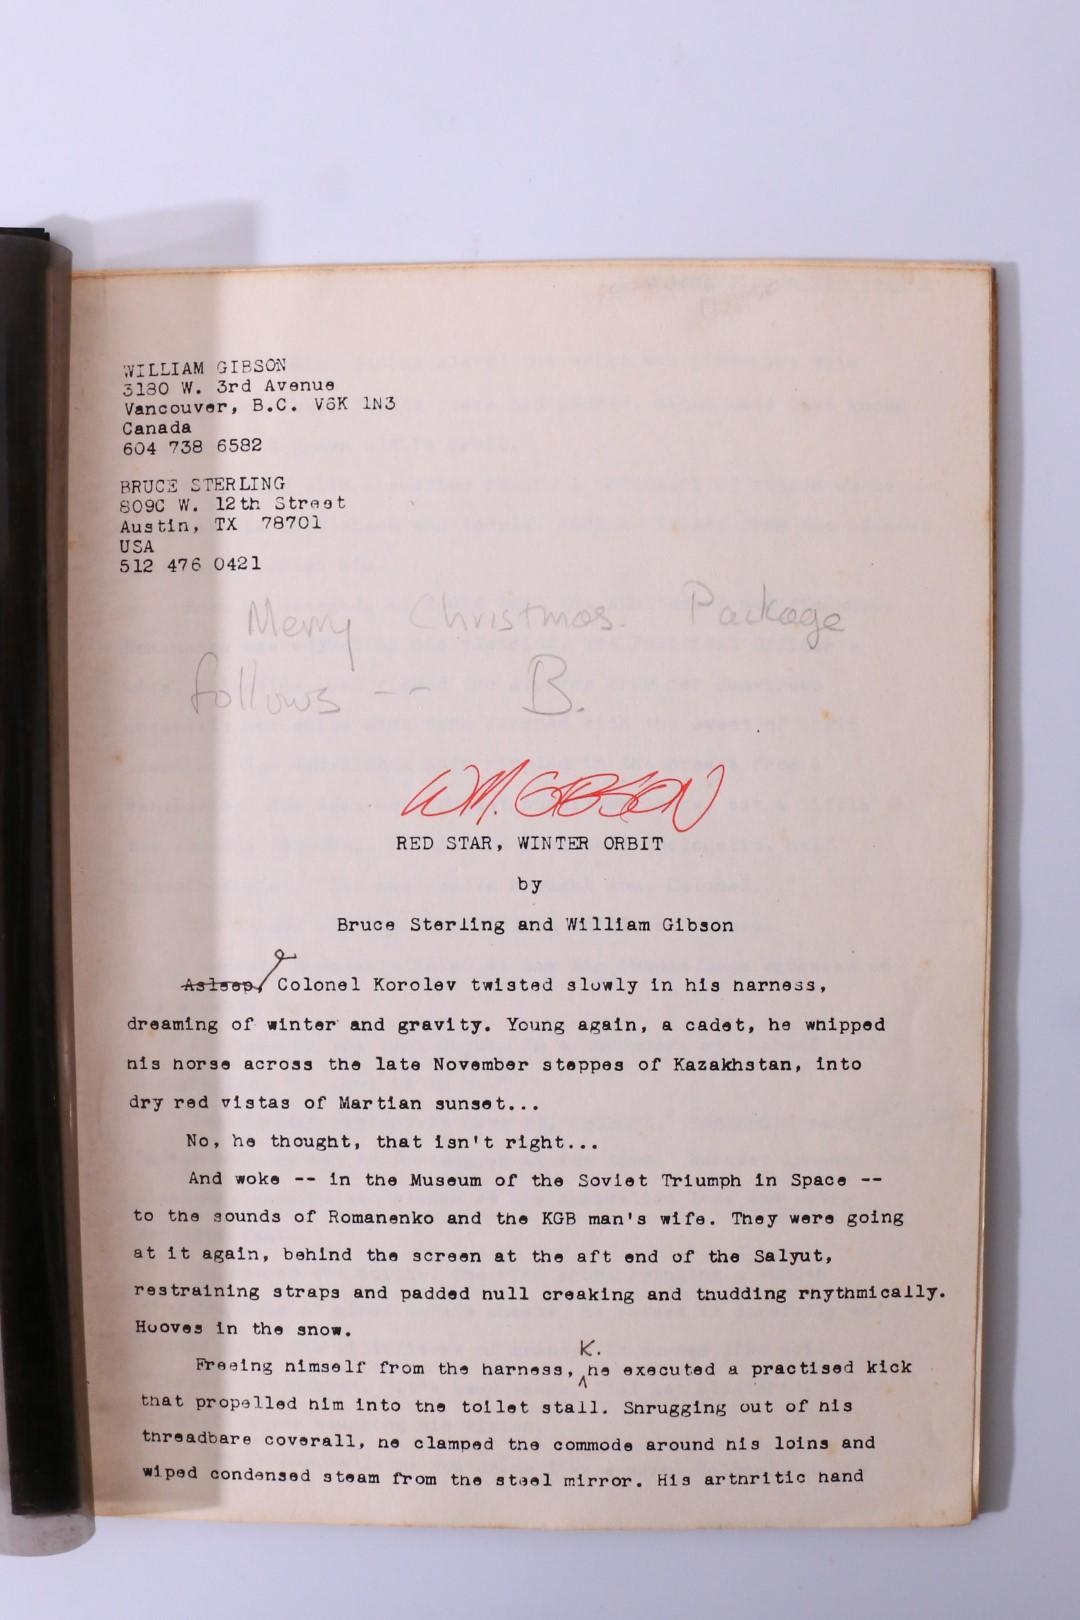 William Gibson & Bruce Sterling - Red Star, Winter Orbit - Typescript - , n.d. [c1983], Manuscript. Signed